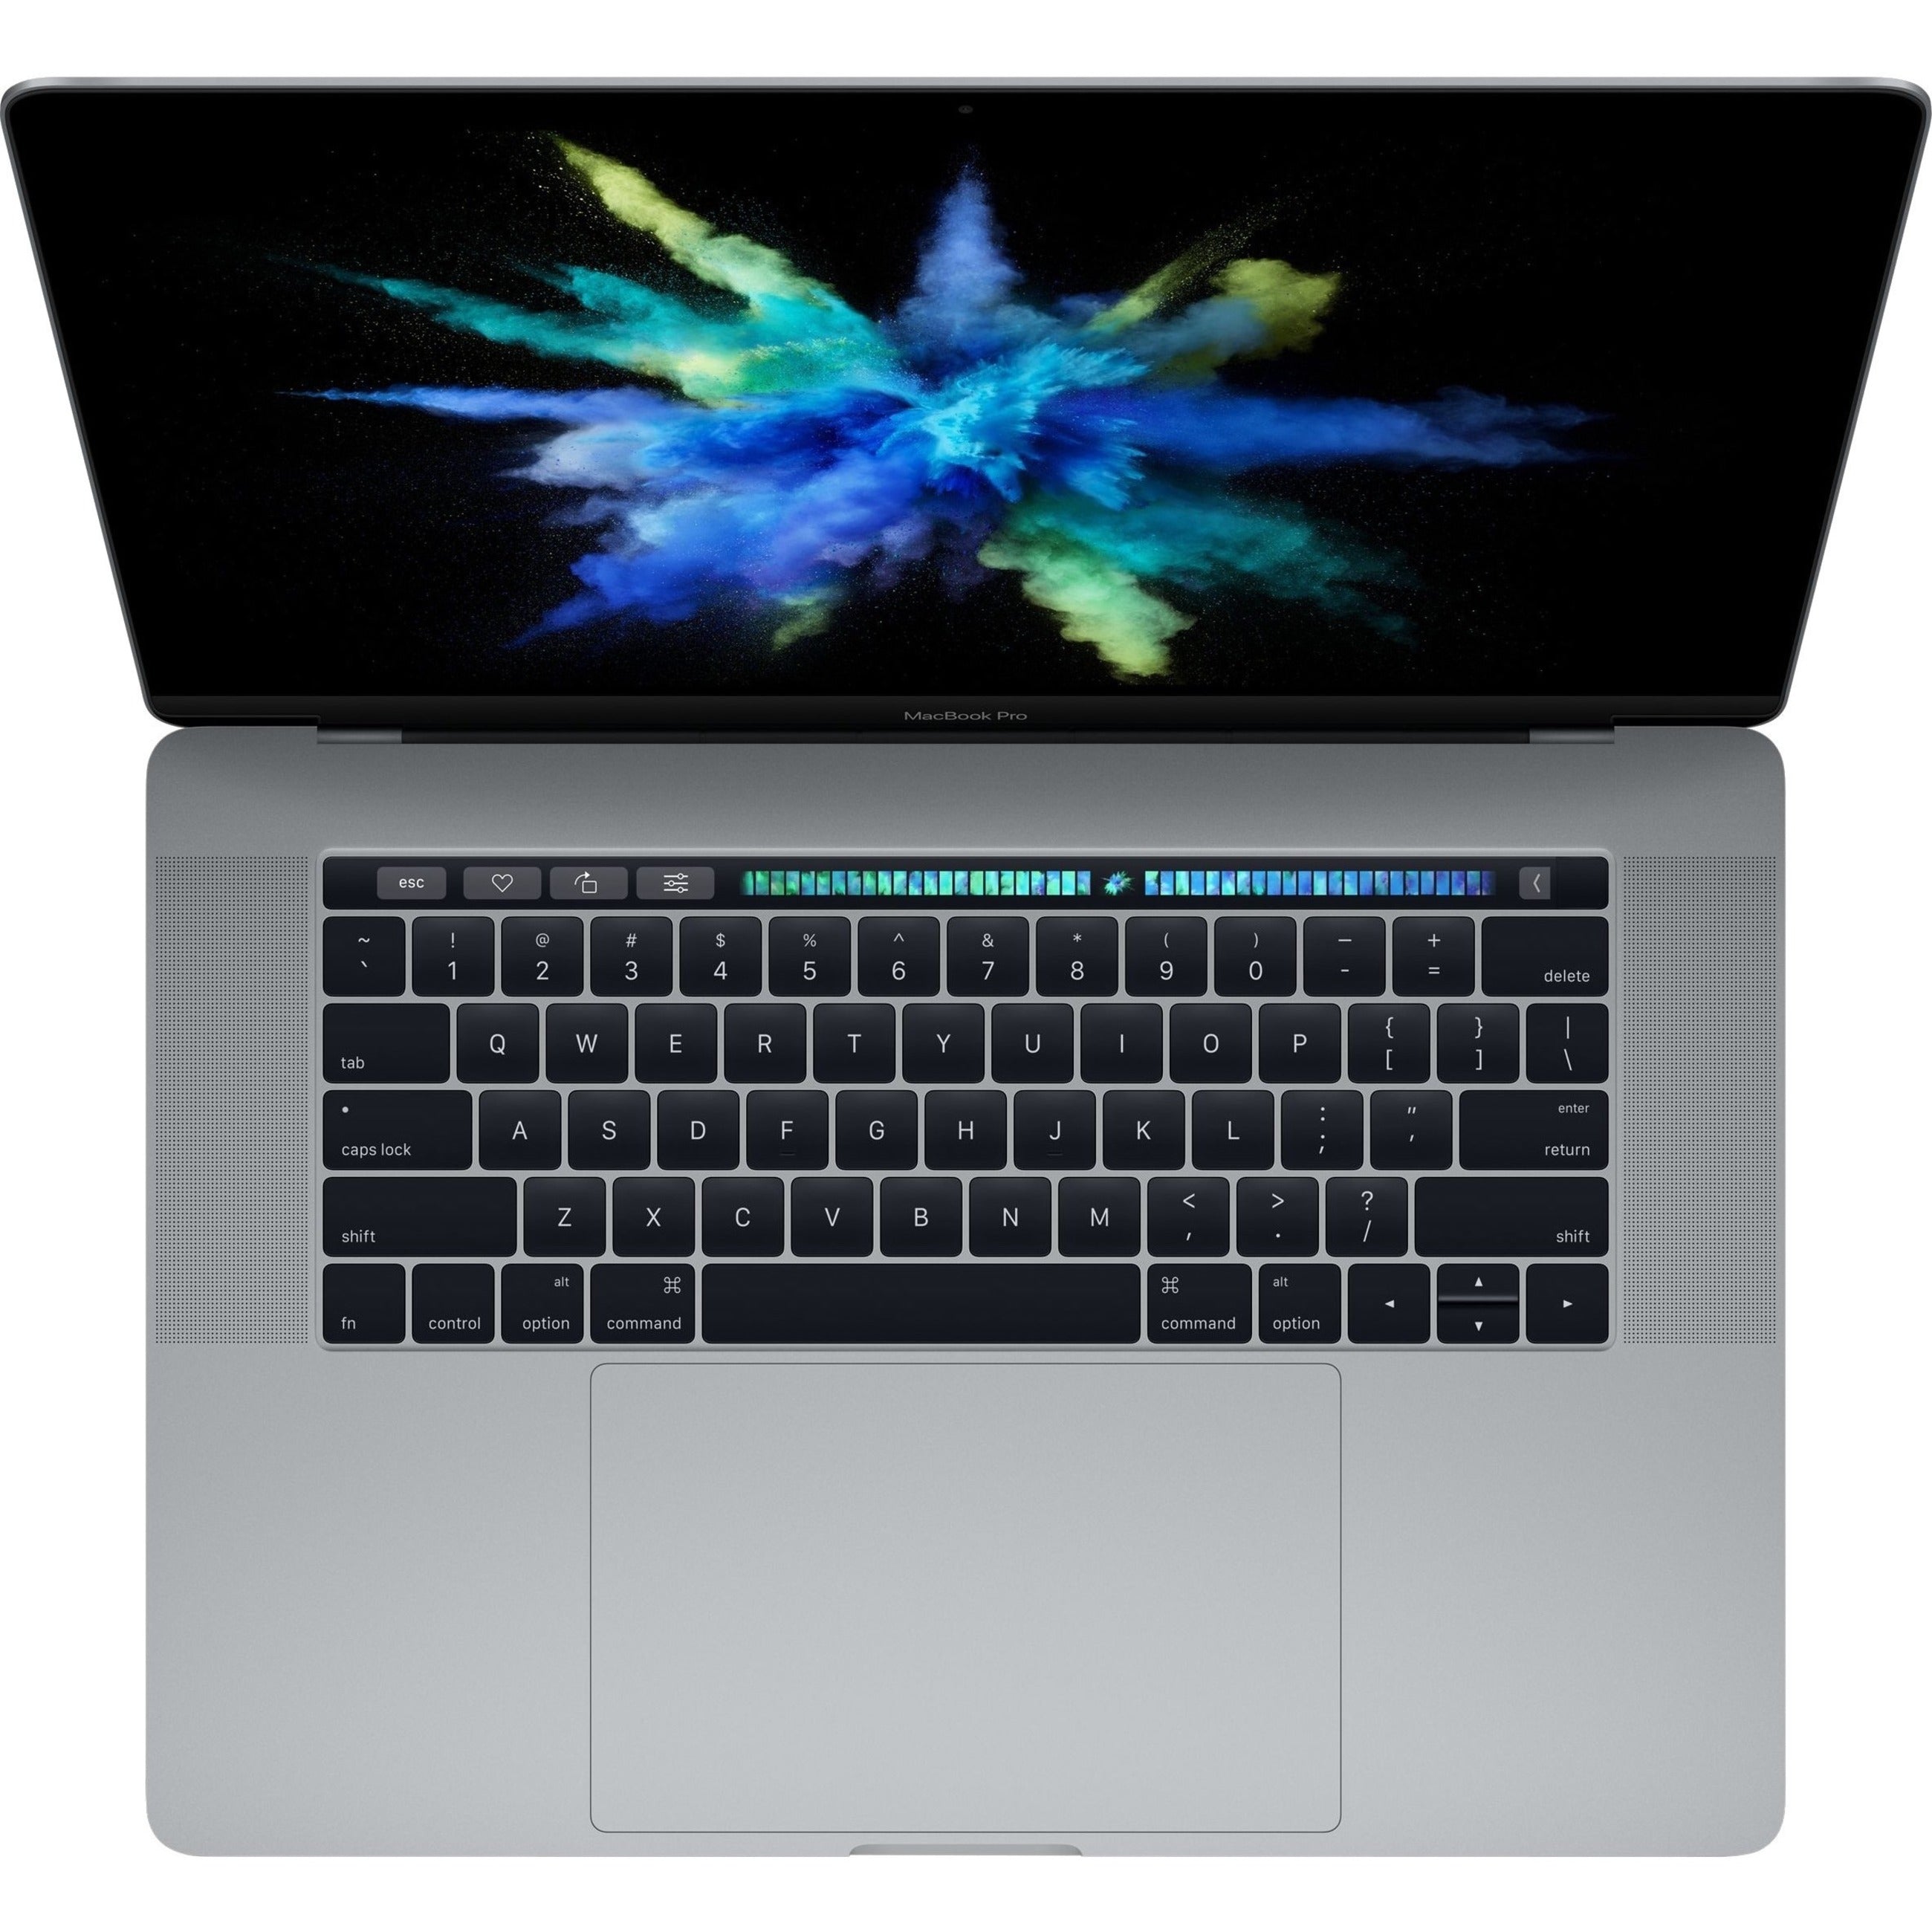 Apple MR932LL/A 15-inch MacBook Pro - Space Gray, 2.2GHz, 16GB RAM, 256GB SSD, Radeon Pro 555X